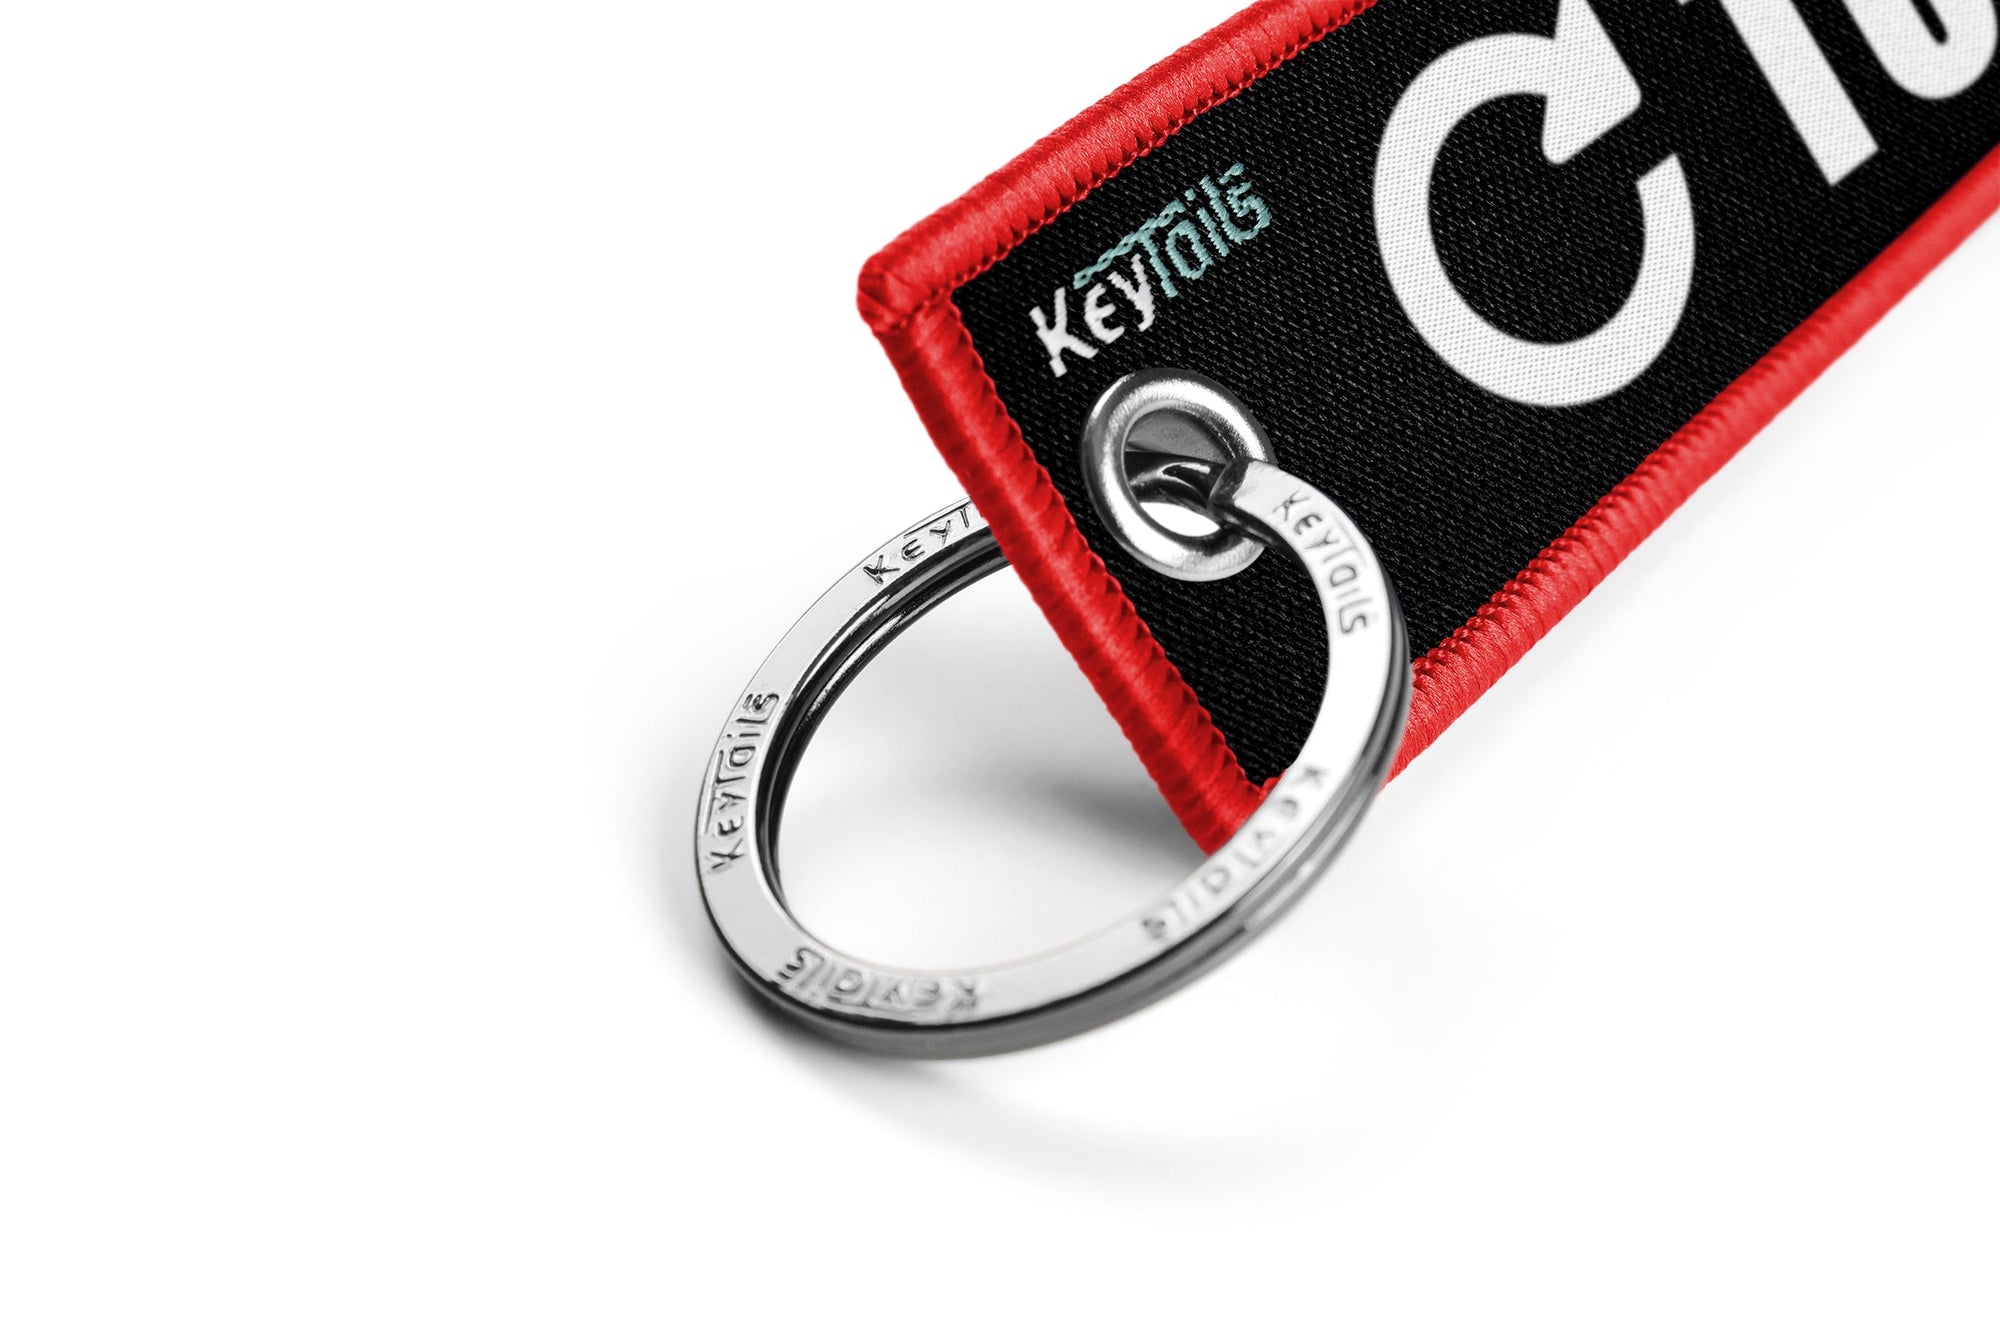 Turn To Arm Keychain, Key Tag - Red